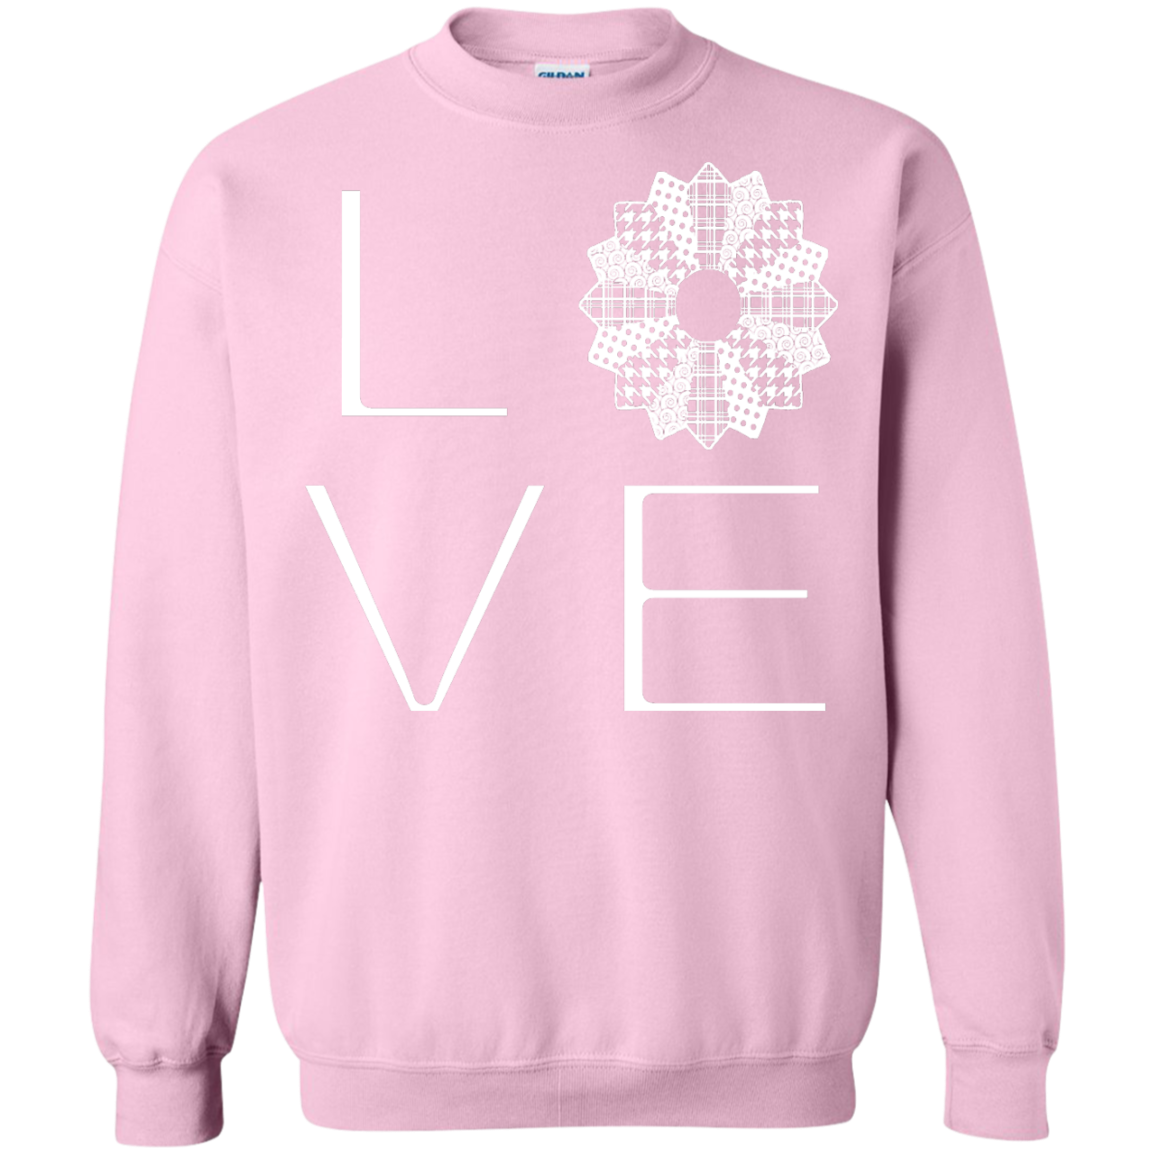 LOVE Quilting Crewneck Sweatshirts - Crafter4Life - 12